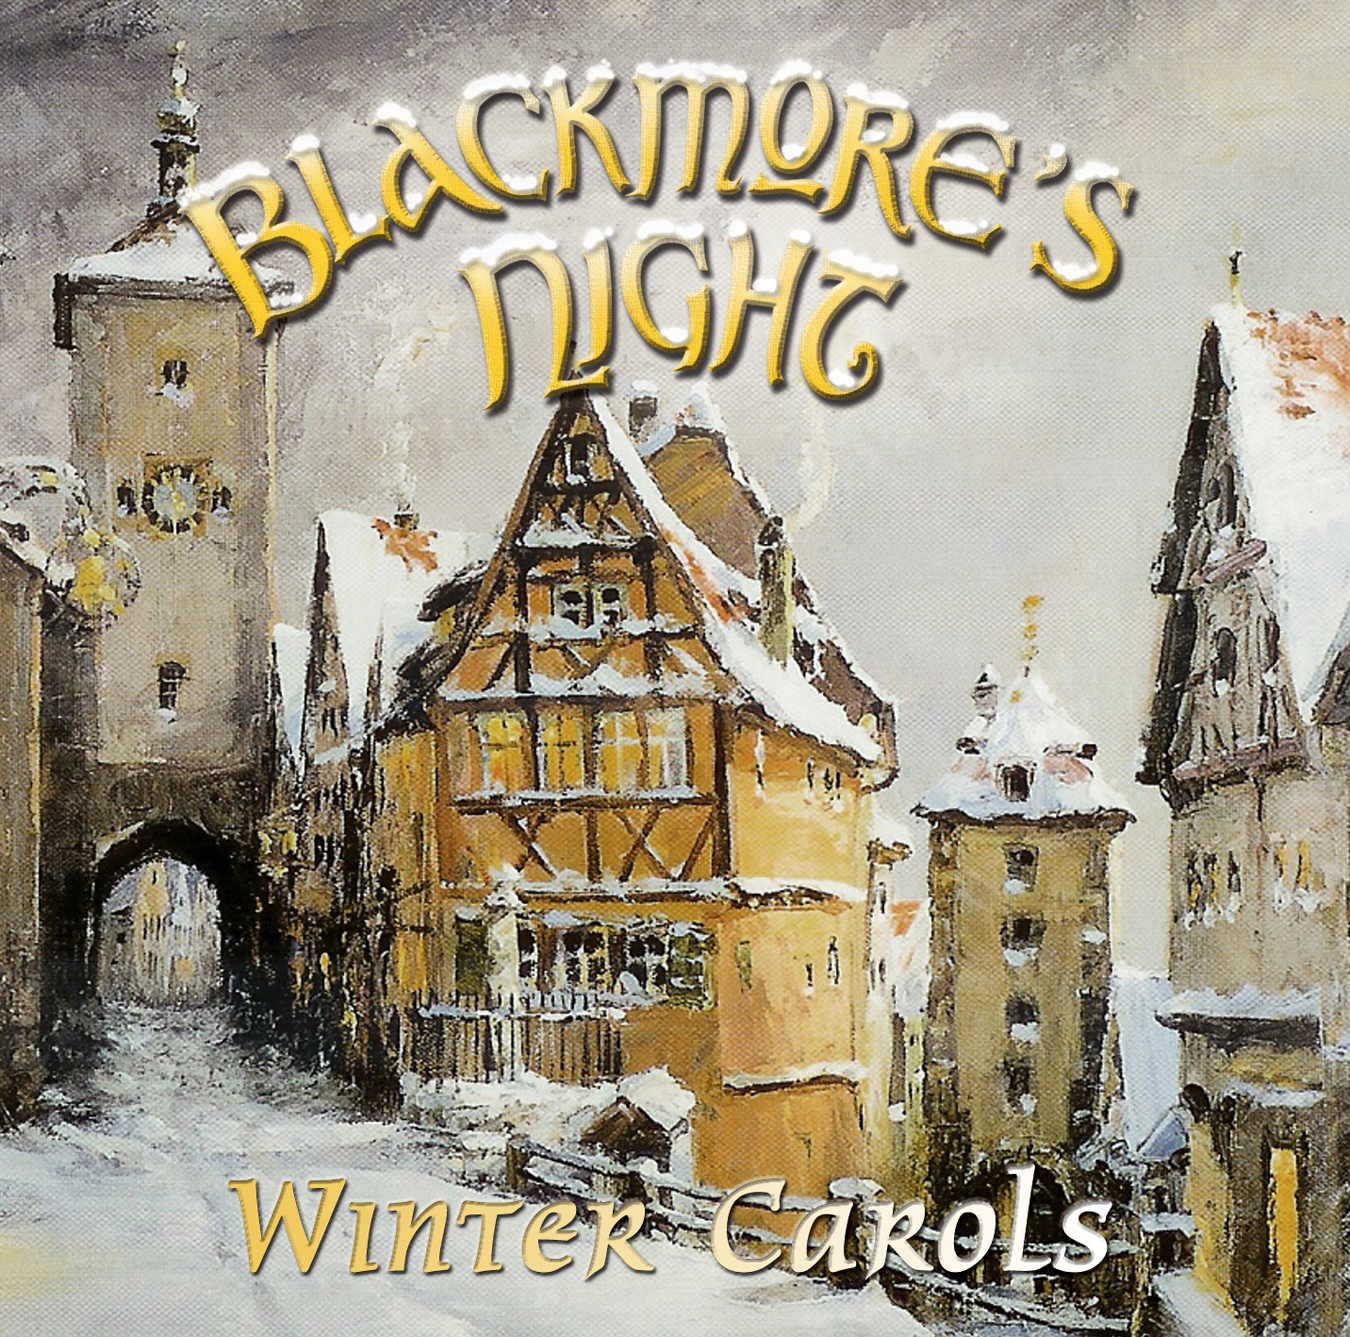 Blackmore's Night - Winter Carols 2006